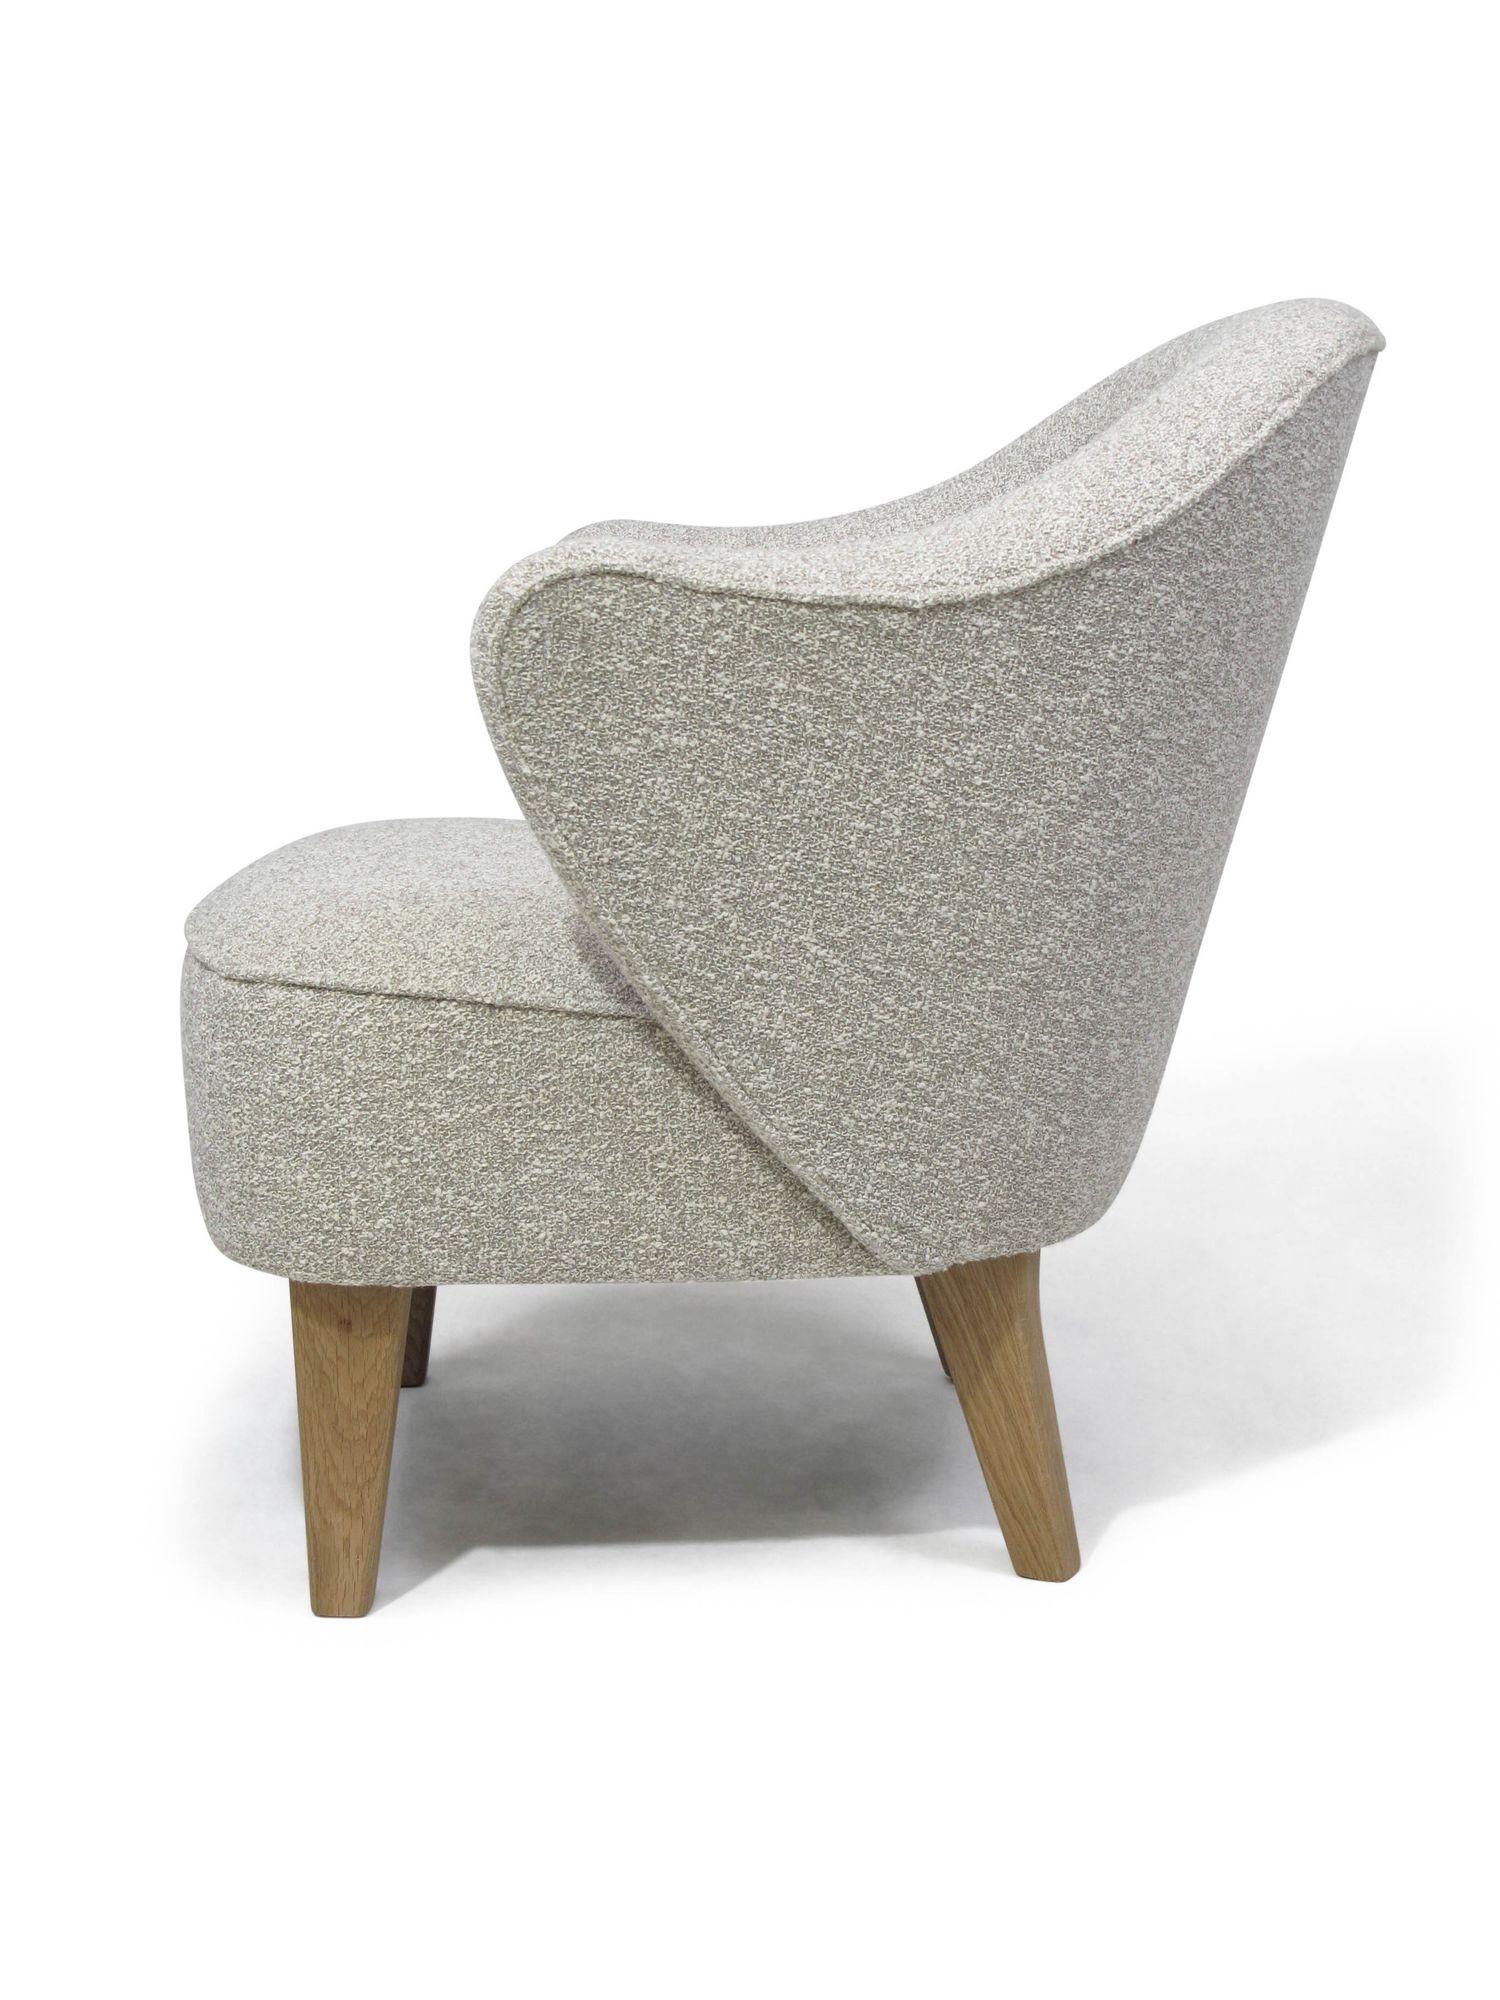 Danish Flemming Lassen Ingeborg Lounge Chairs Chairs For Sale